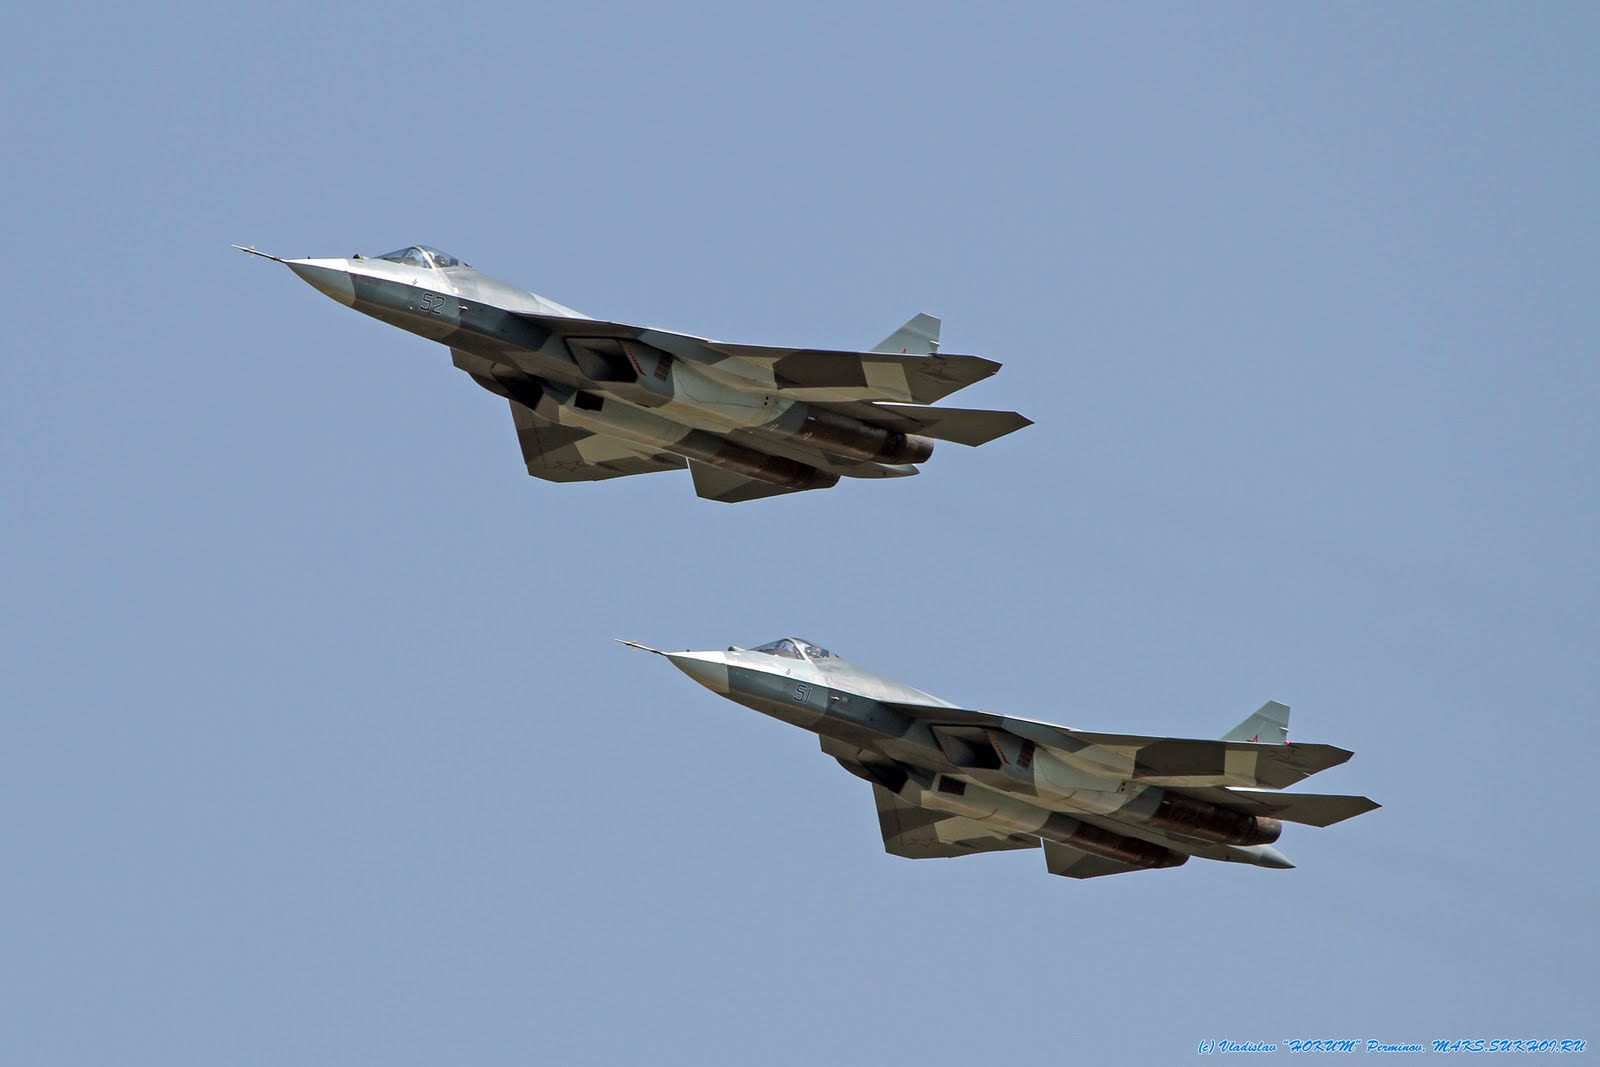 http://1.bp.blogspot.com/-6k-B4cT43vg/TkkpFWs1VwI/AAAAAAAAAME/eEhyyL7_o5w/s1600/Two+Russian+PAK-FA+Stealth+Fighters+Flying+Together.jpg